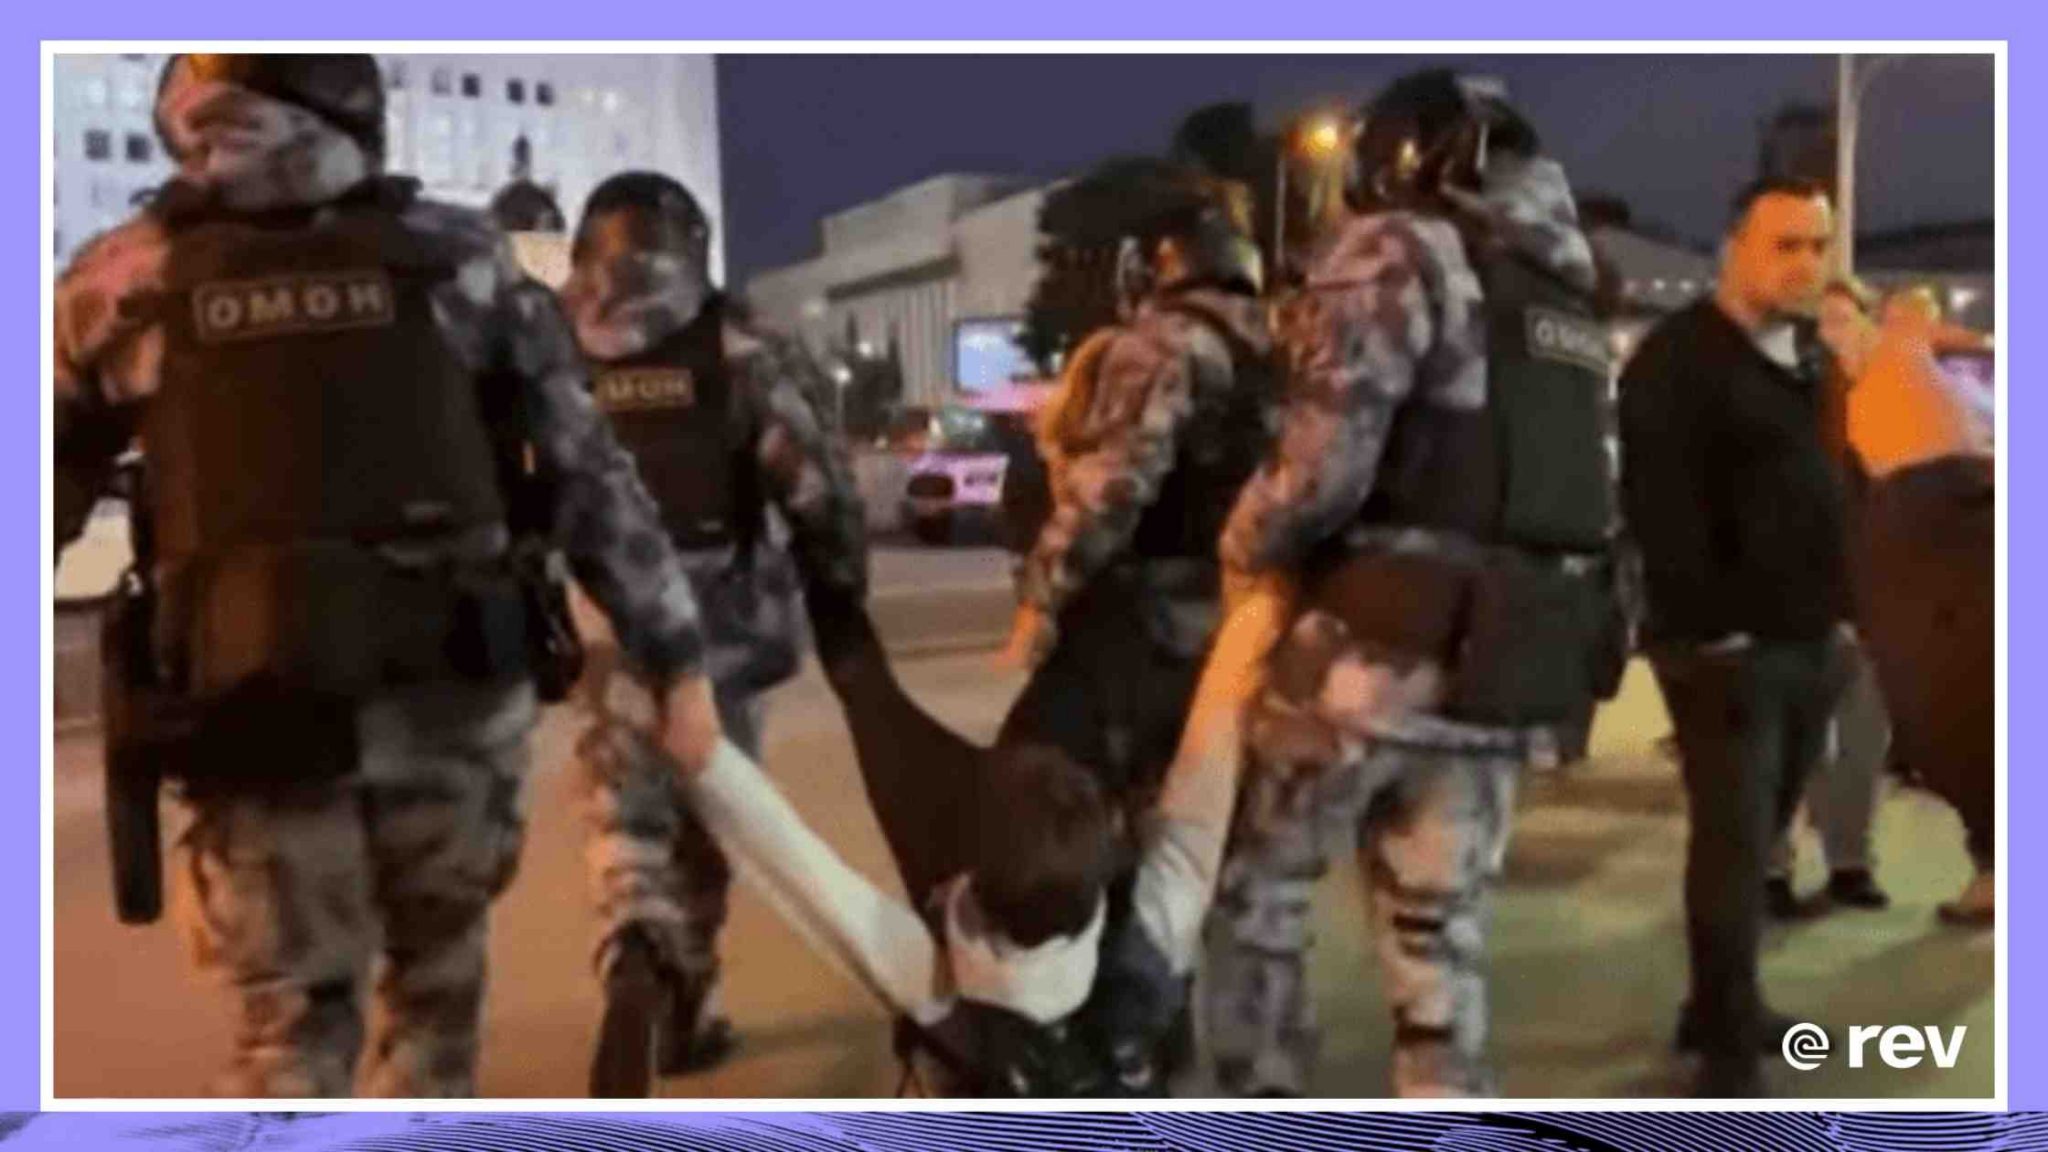 Crackdown in Russia Video shows police arresting protesters Transcript